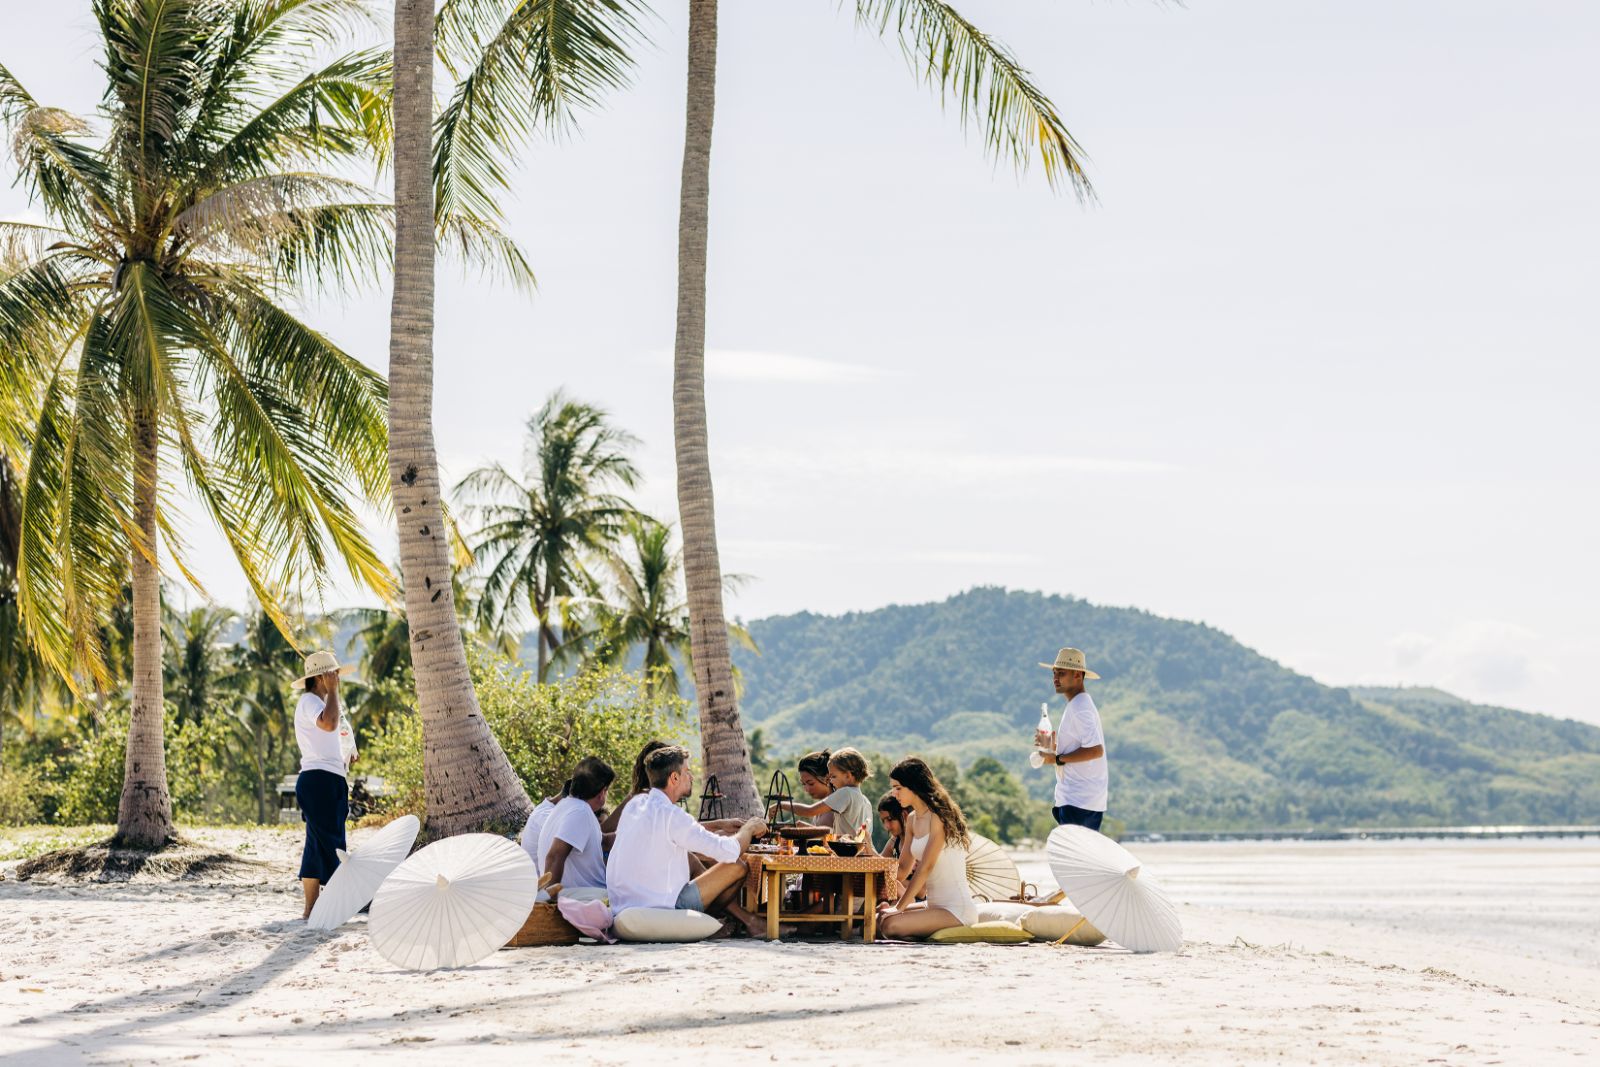 Beach picnic at ANI Thailand villa on Koh Yao Noi island in the Pha Ngan Bay in Thailand